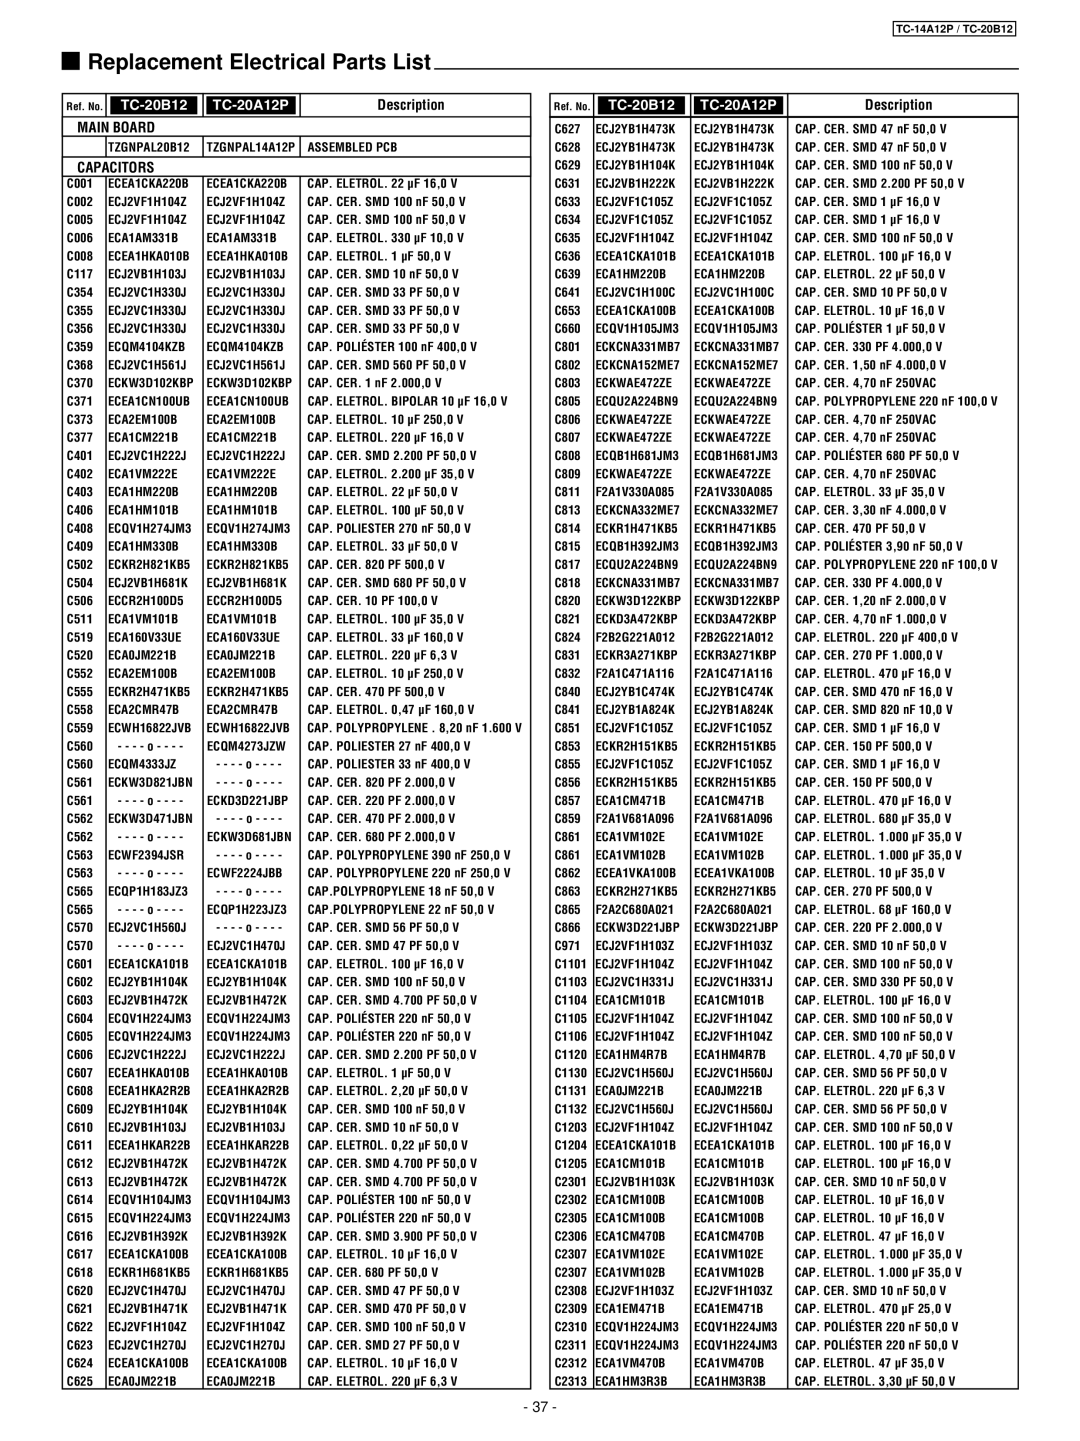 Panasonic TC-14A12P service manual Replacement Electrical Parts List, TC-20B12, TC-20A12P 